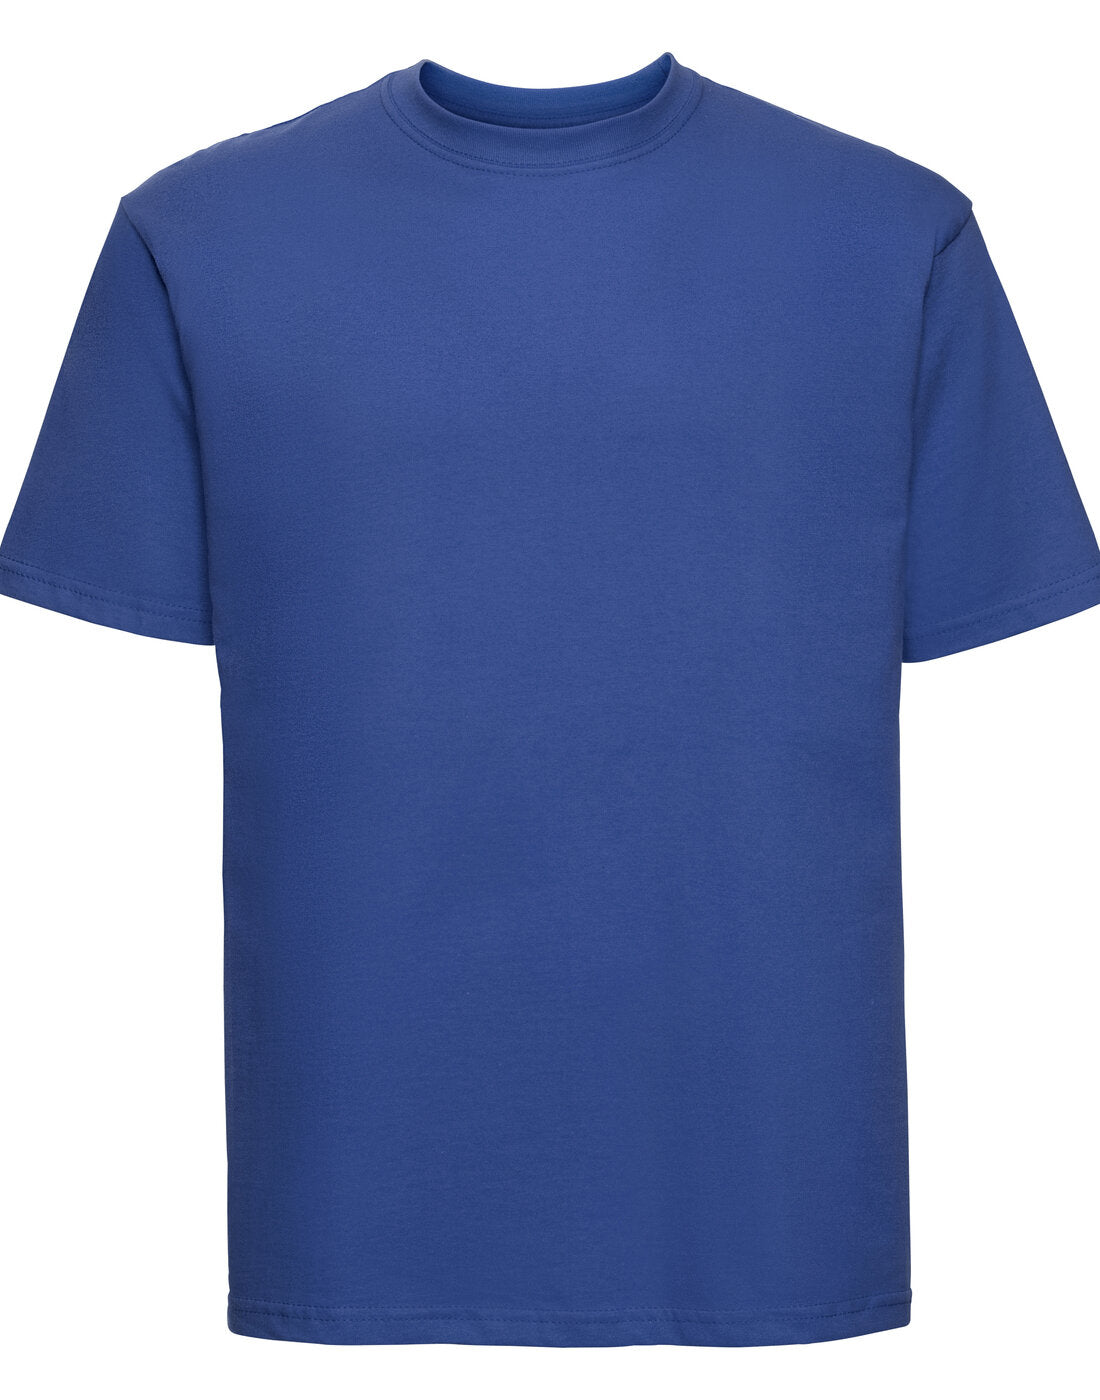 Russell Classic Unisex T-Shirt - Azure Blue